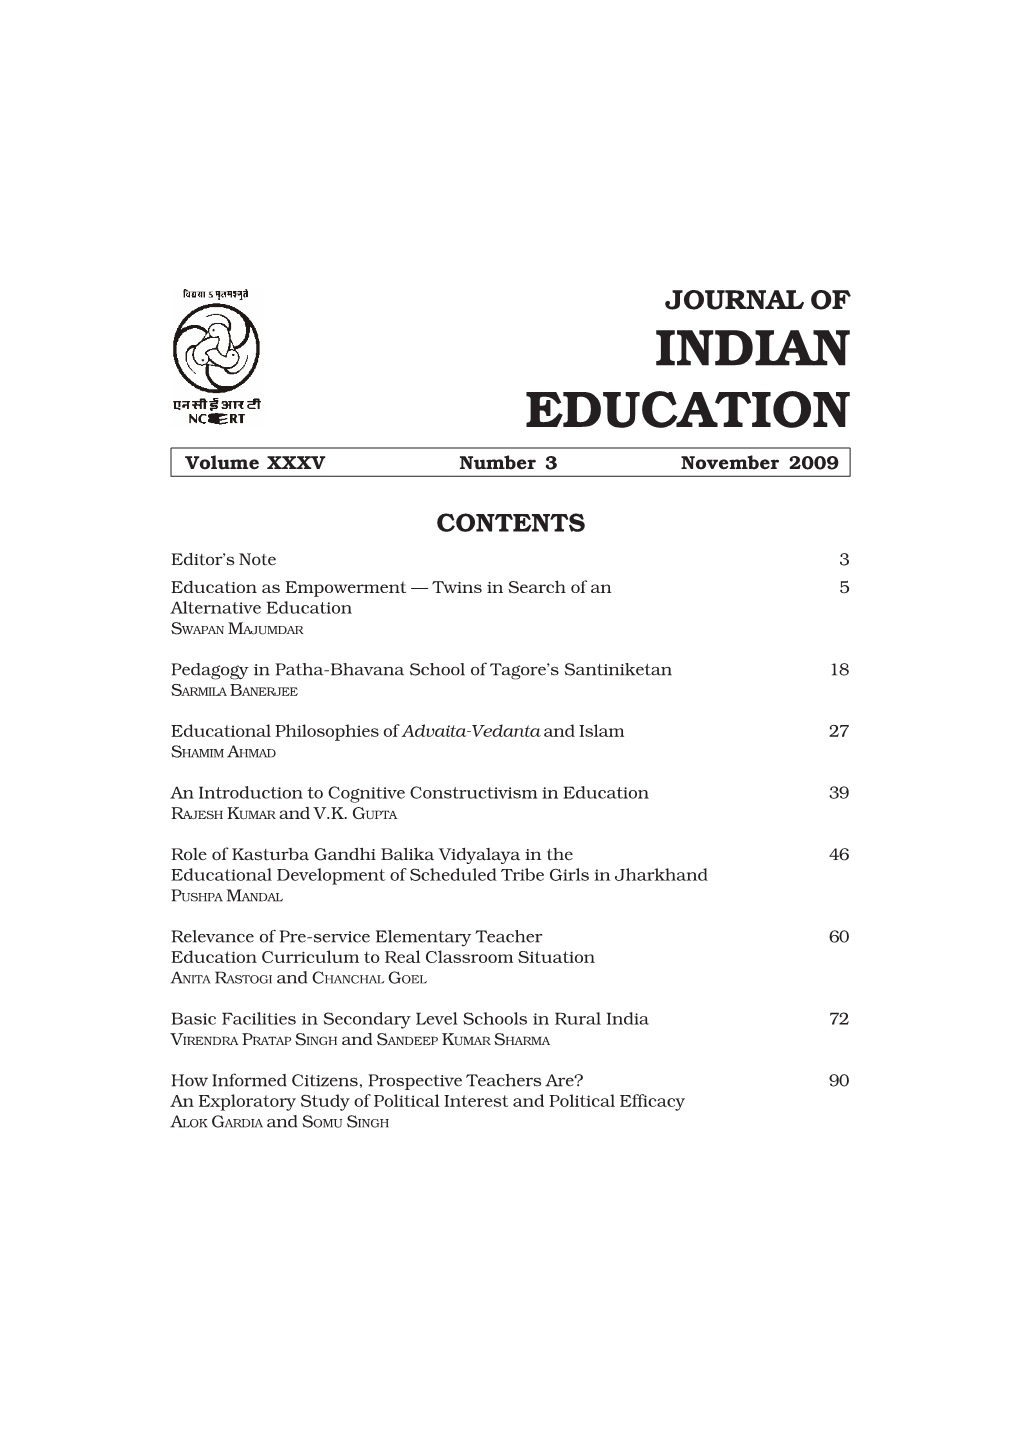 JOURNAL of INDIAN EDUCATION Volume XXXV Number 3 November 2009